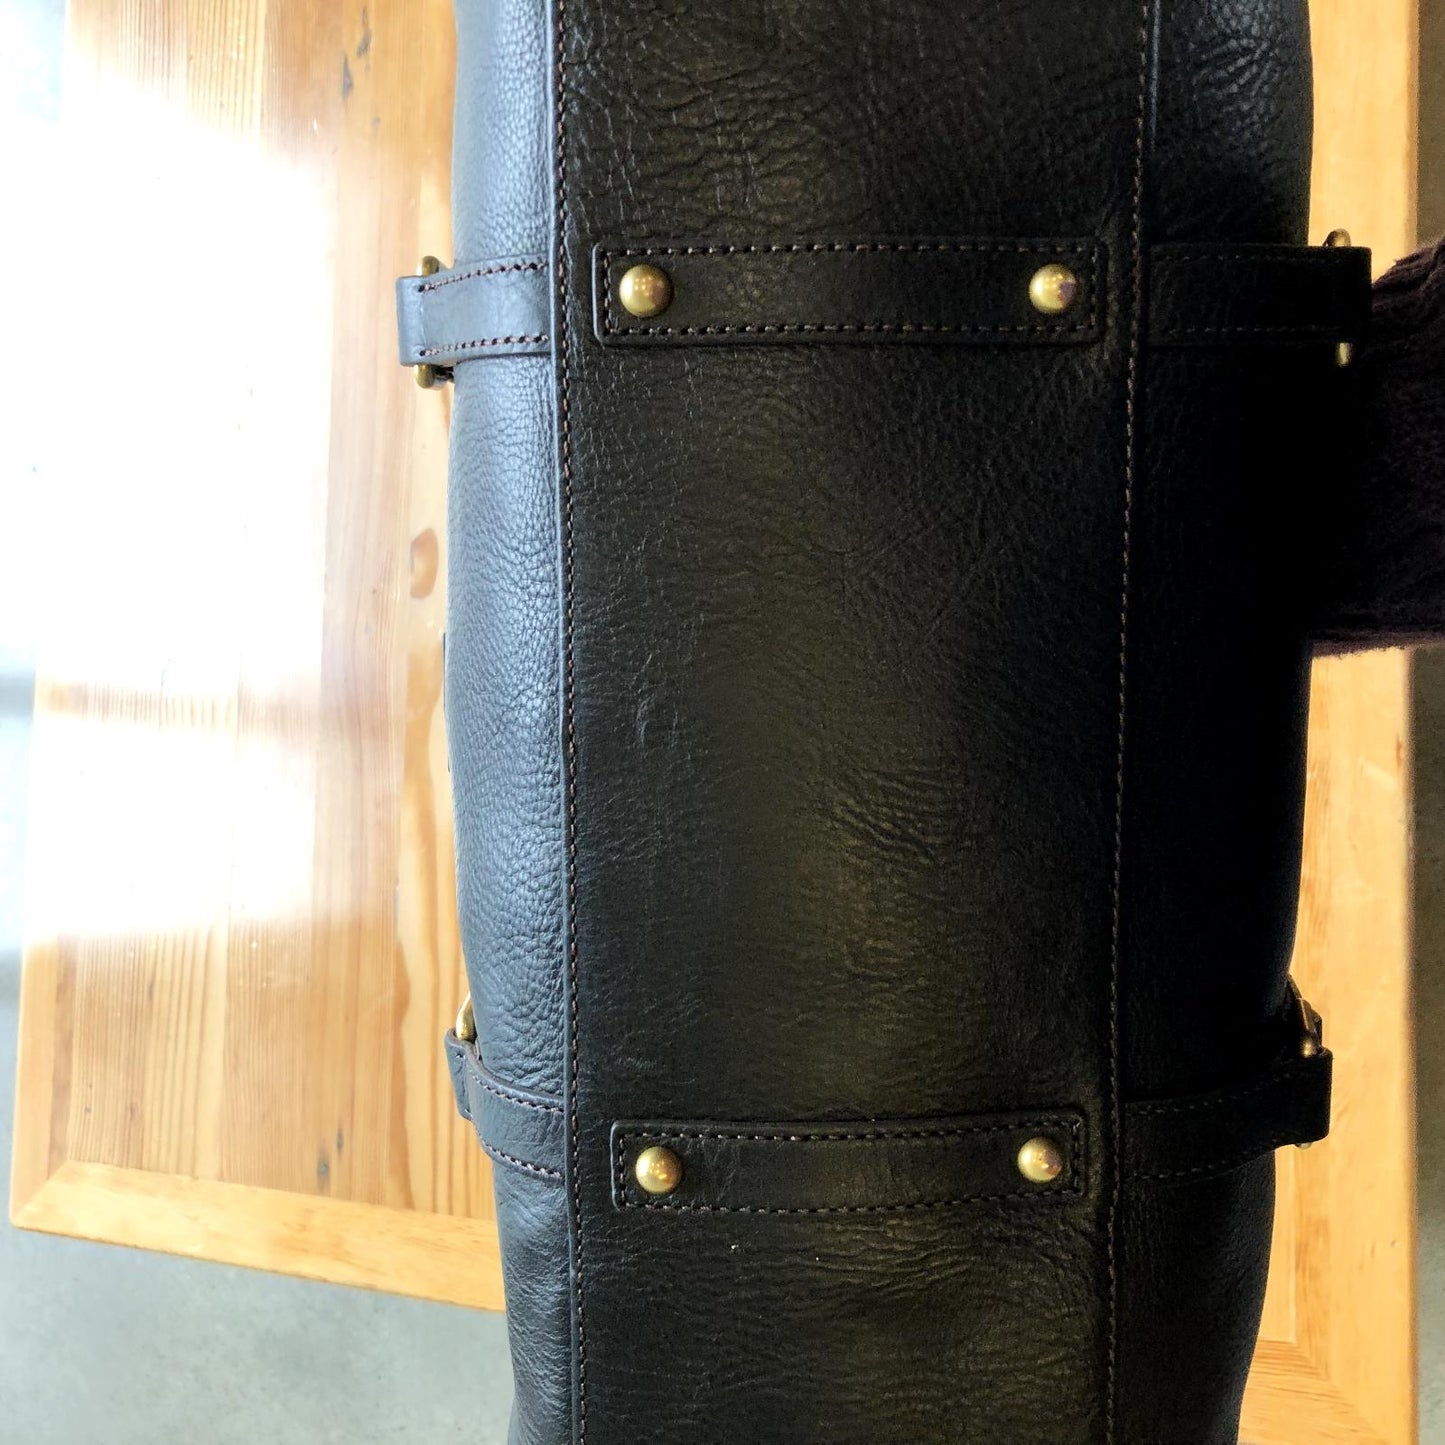 Dooney & Bourke $568 Black Pebble Grain Leather Large Satchel Purse NEW 0221PG